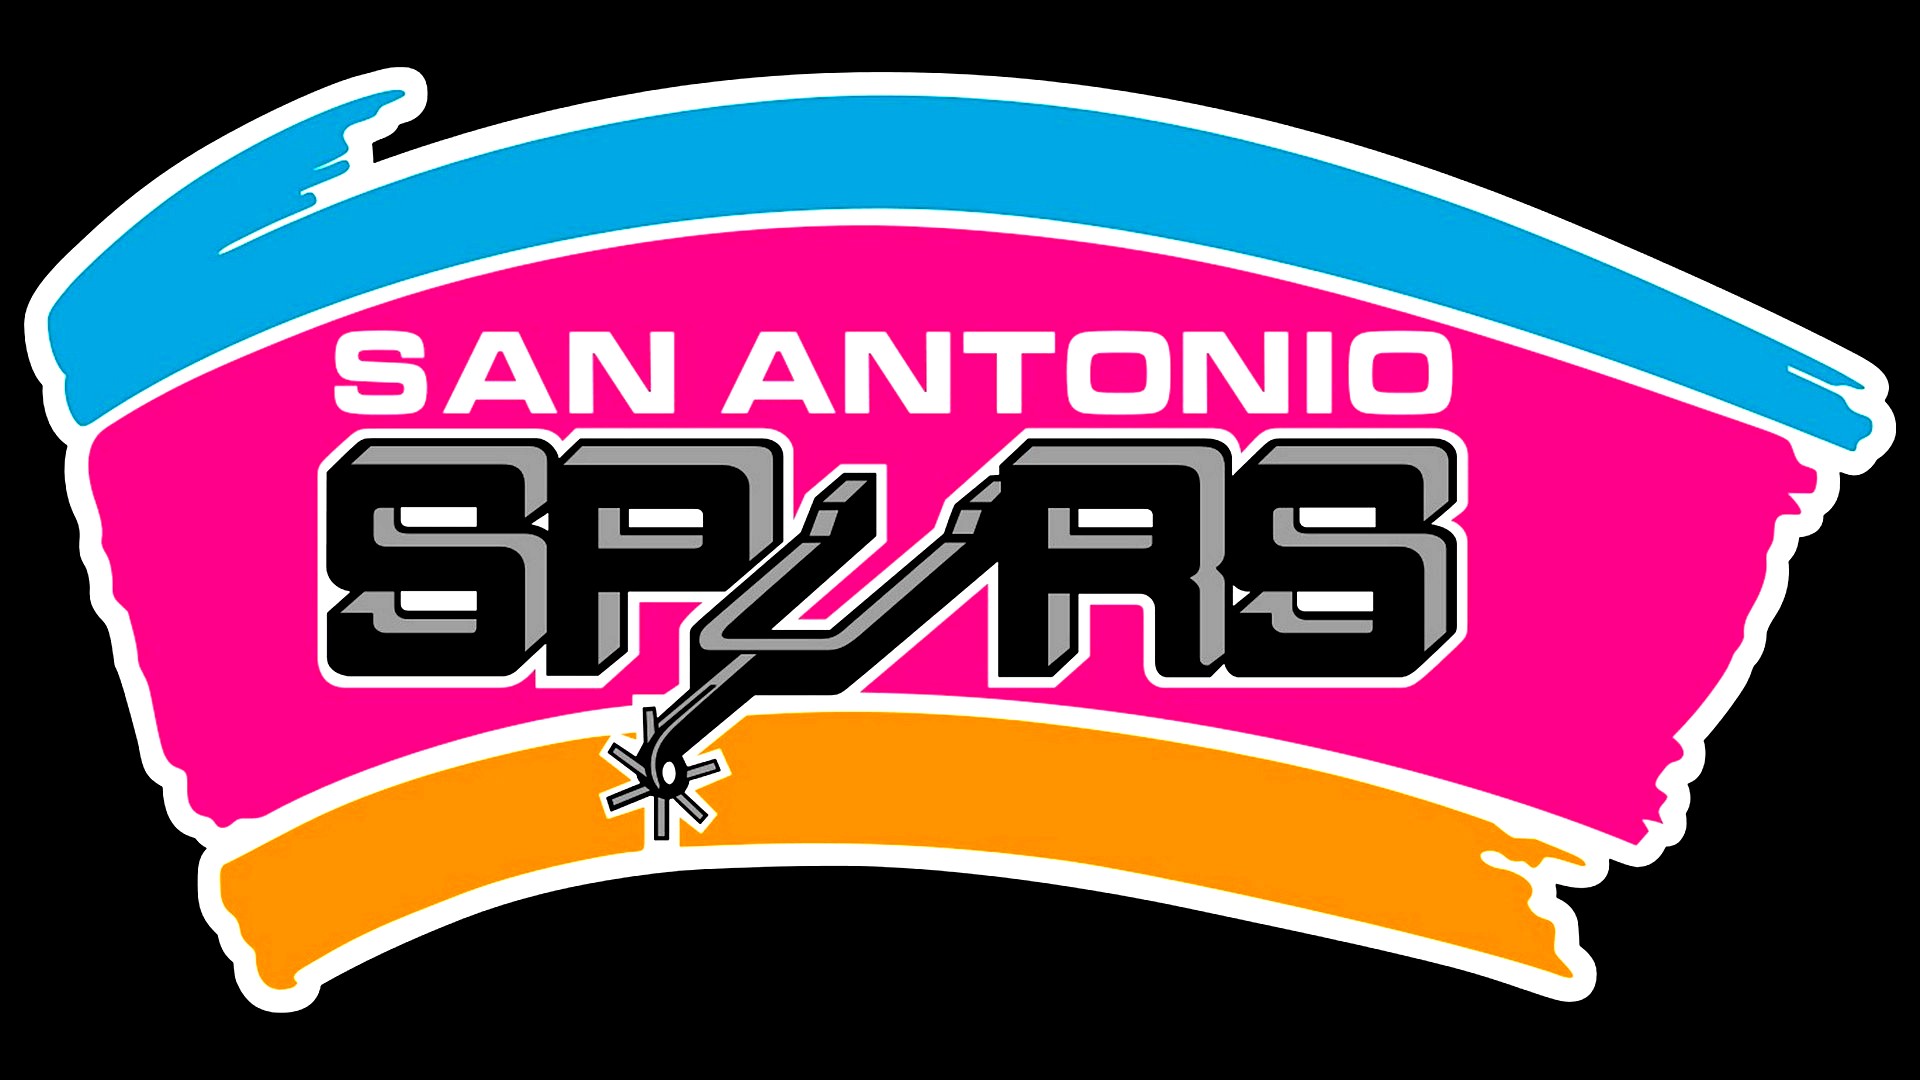 San Antonio Spurs Wallpaper For Mac Background Basketball Wallpaper